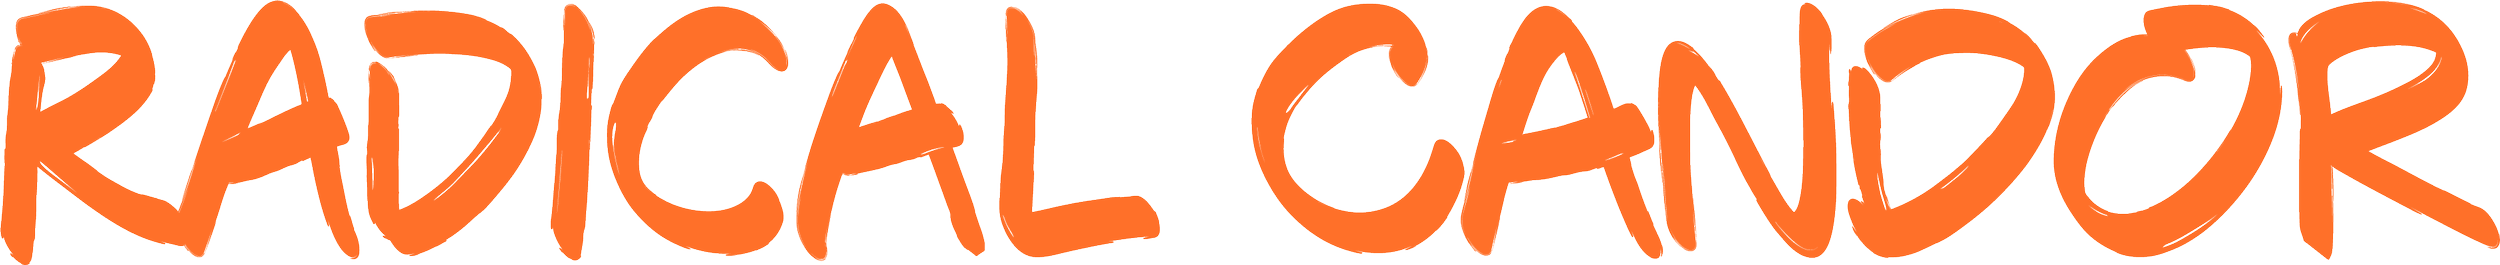 Radical Candor Logo H Transparent BG Orange.png